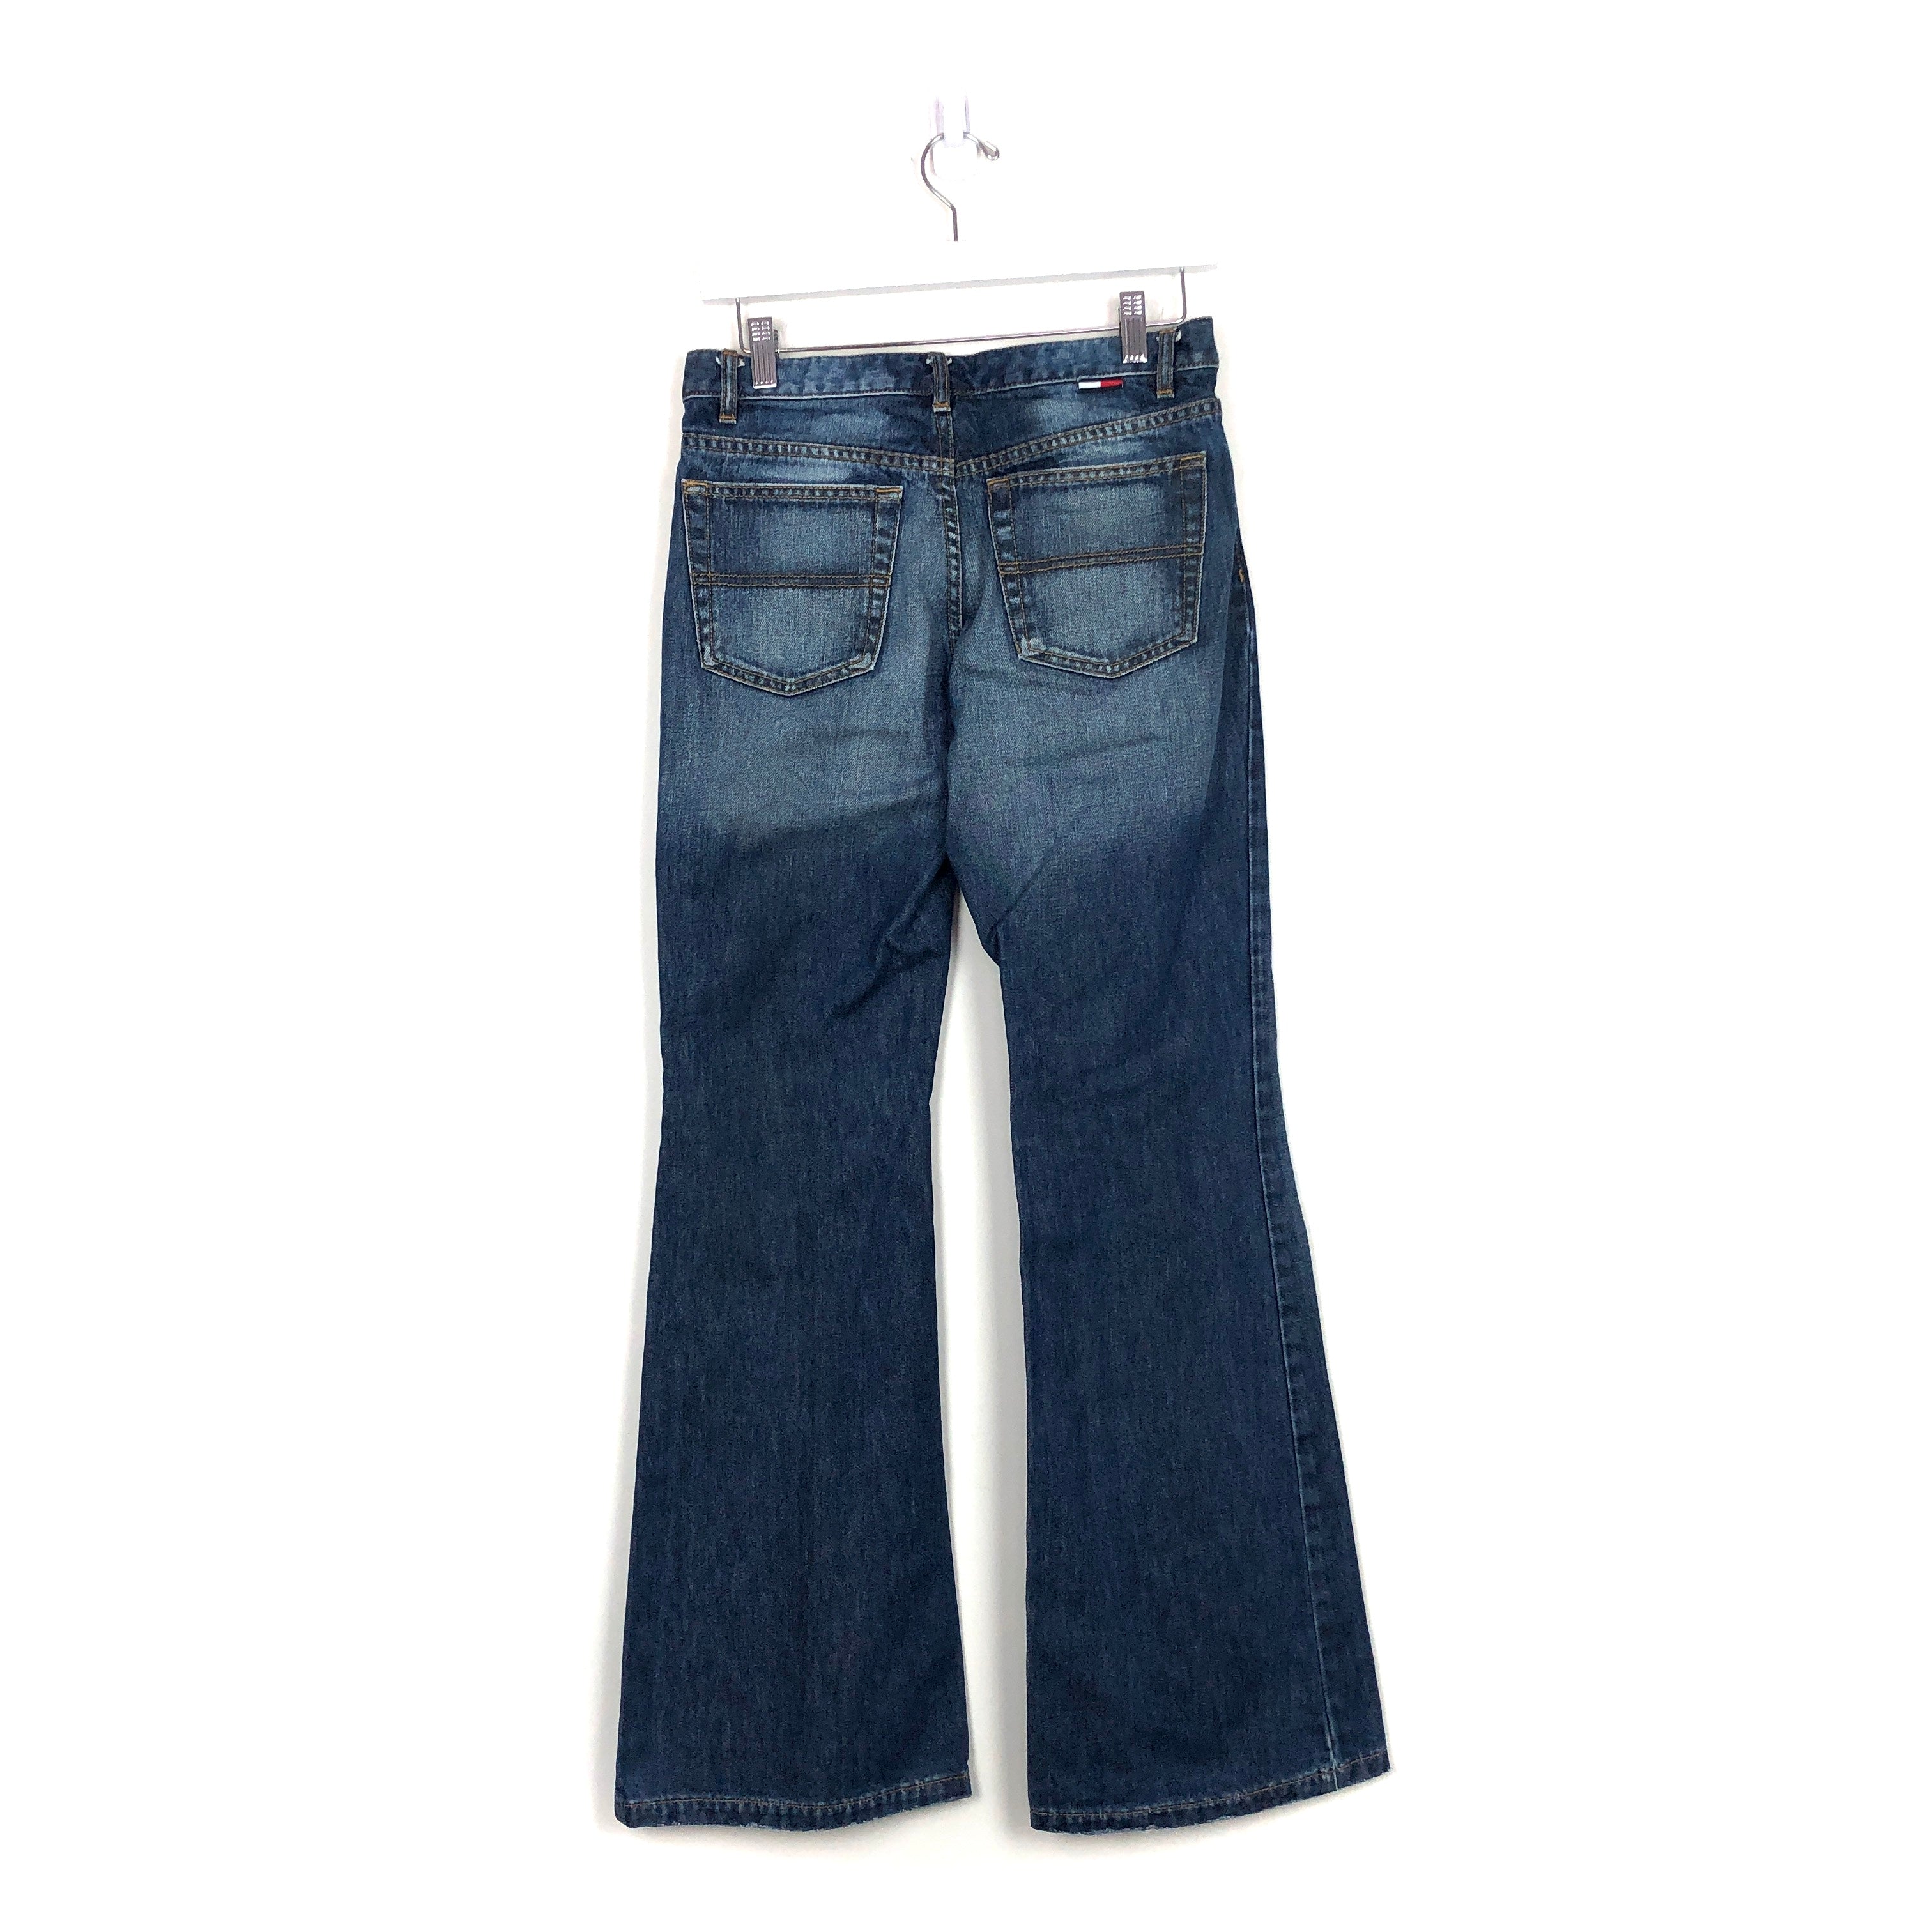 Vintage Tommy Hilfiger Flare Jeans - Women's 5